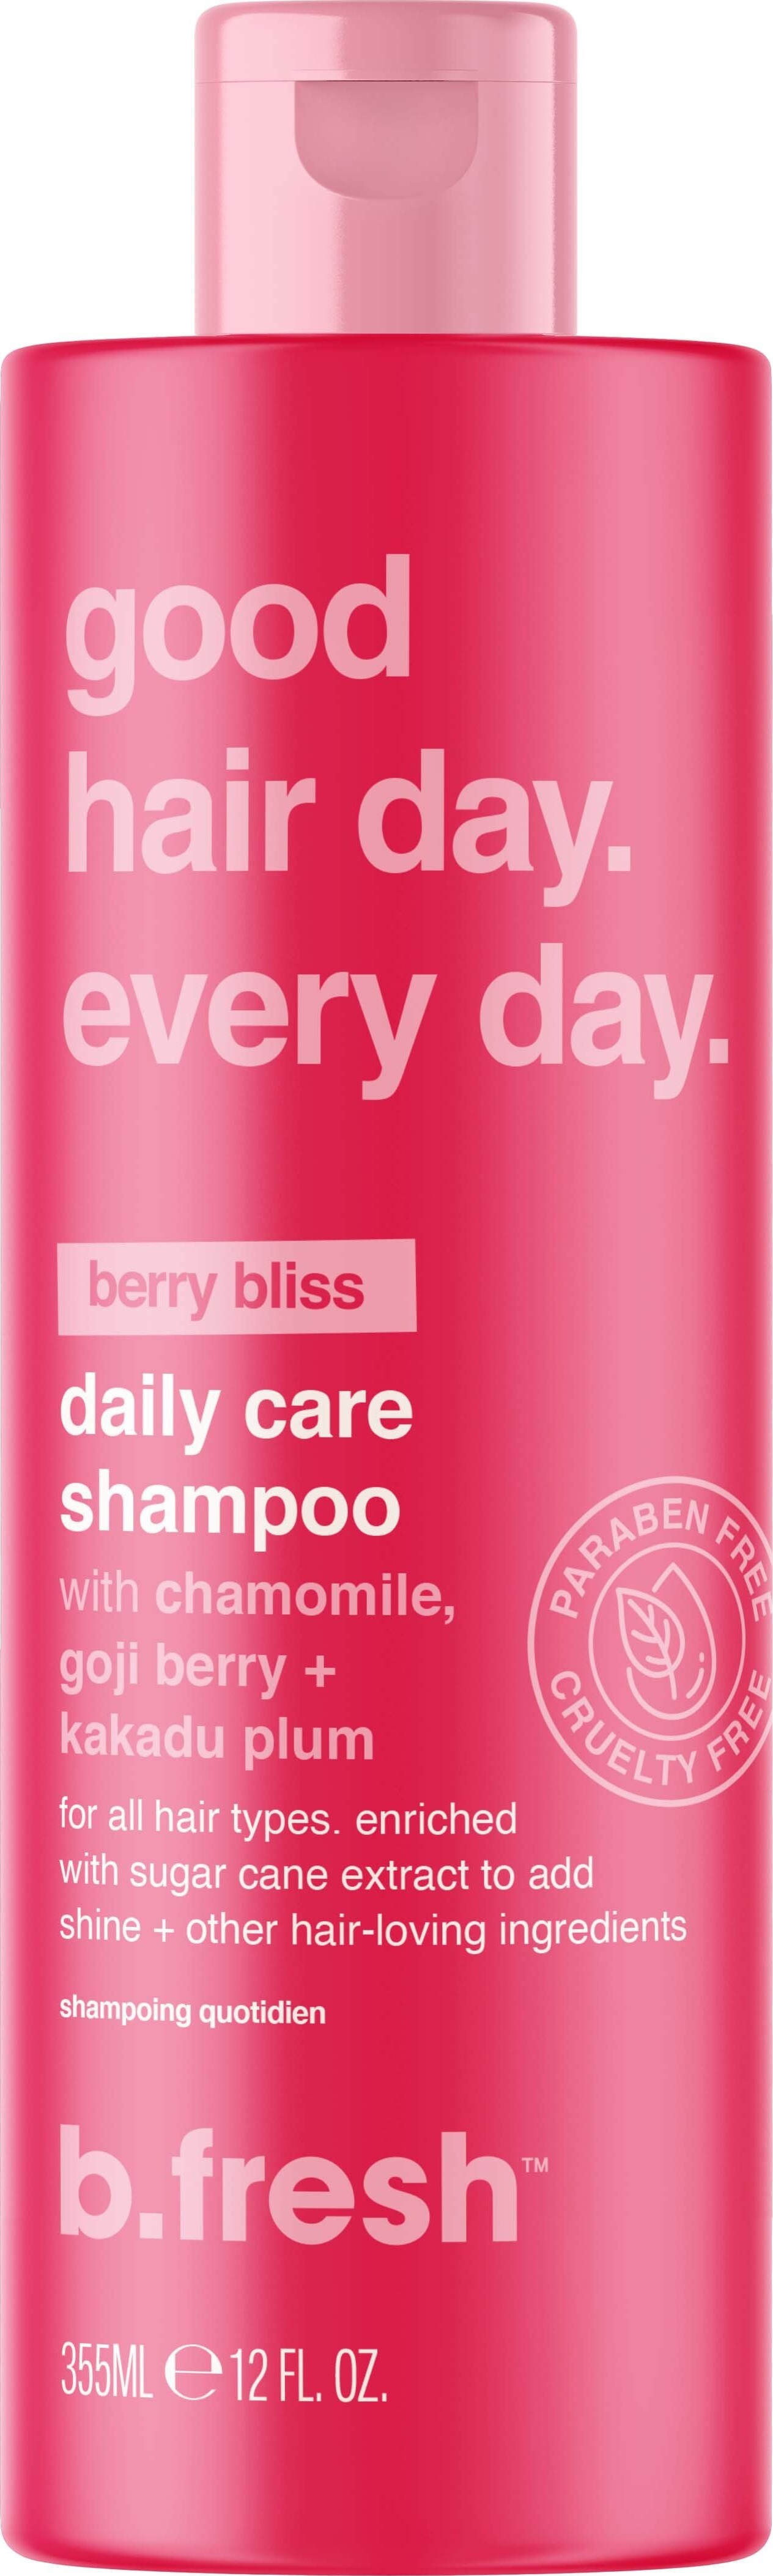 B.fresh - Good Hair Day Every Day Daily Care Shampoo 355 Ml